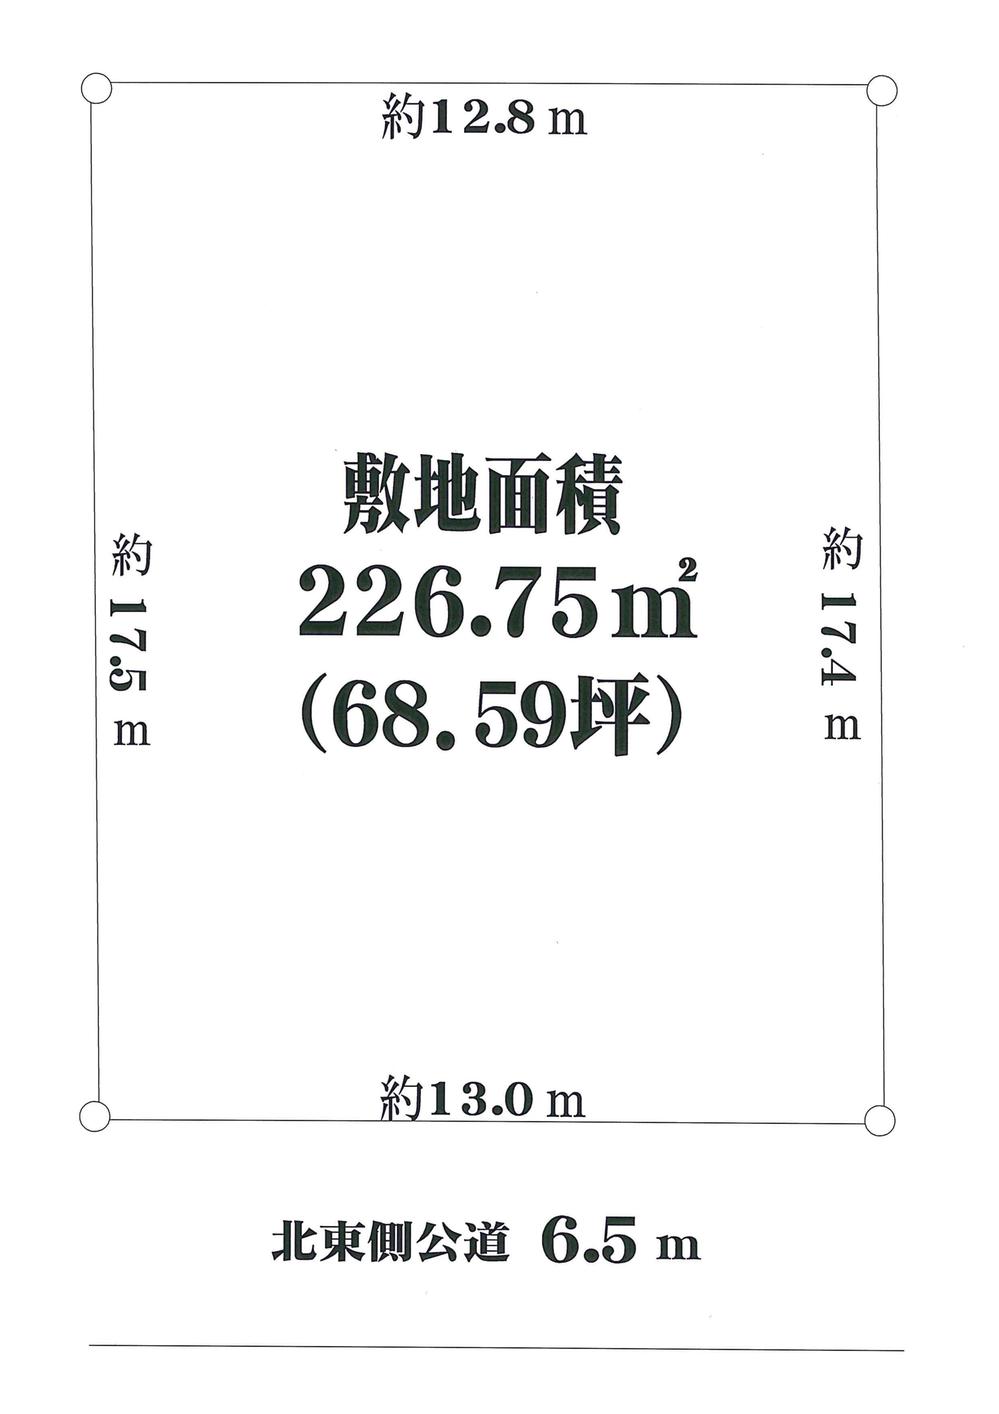 Compartment figure. Land price 34,300,000 yen, Land area 226.75 sq m